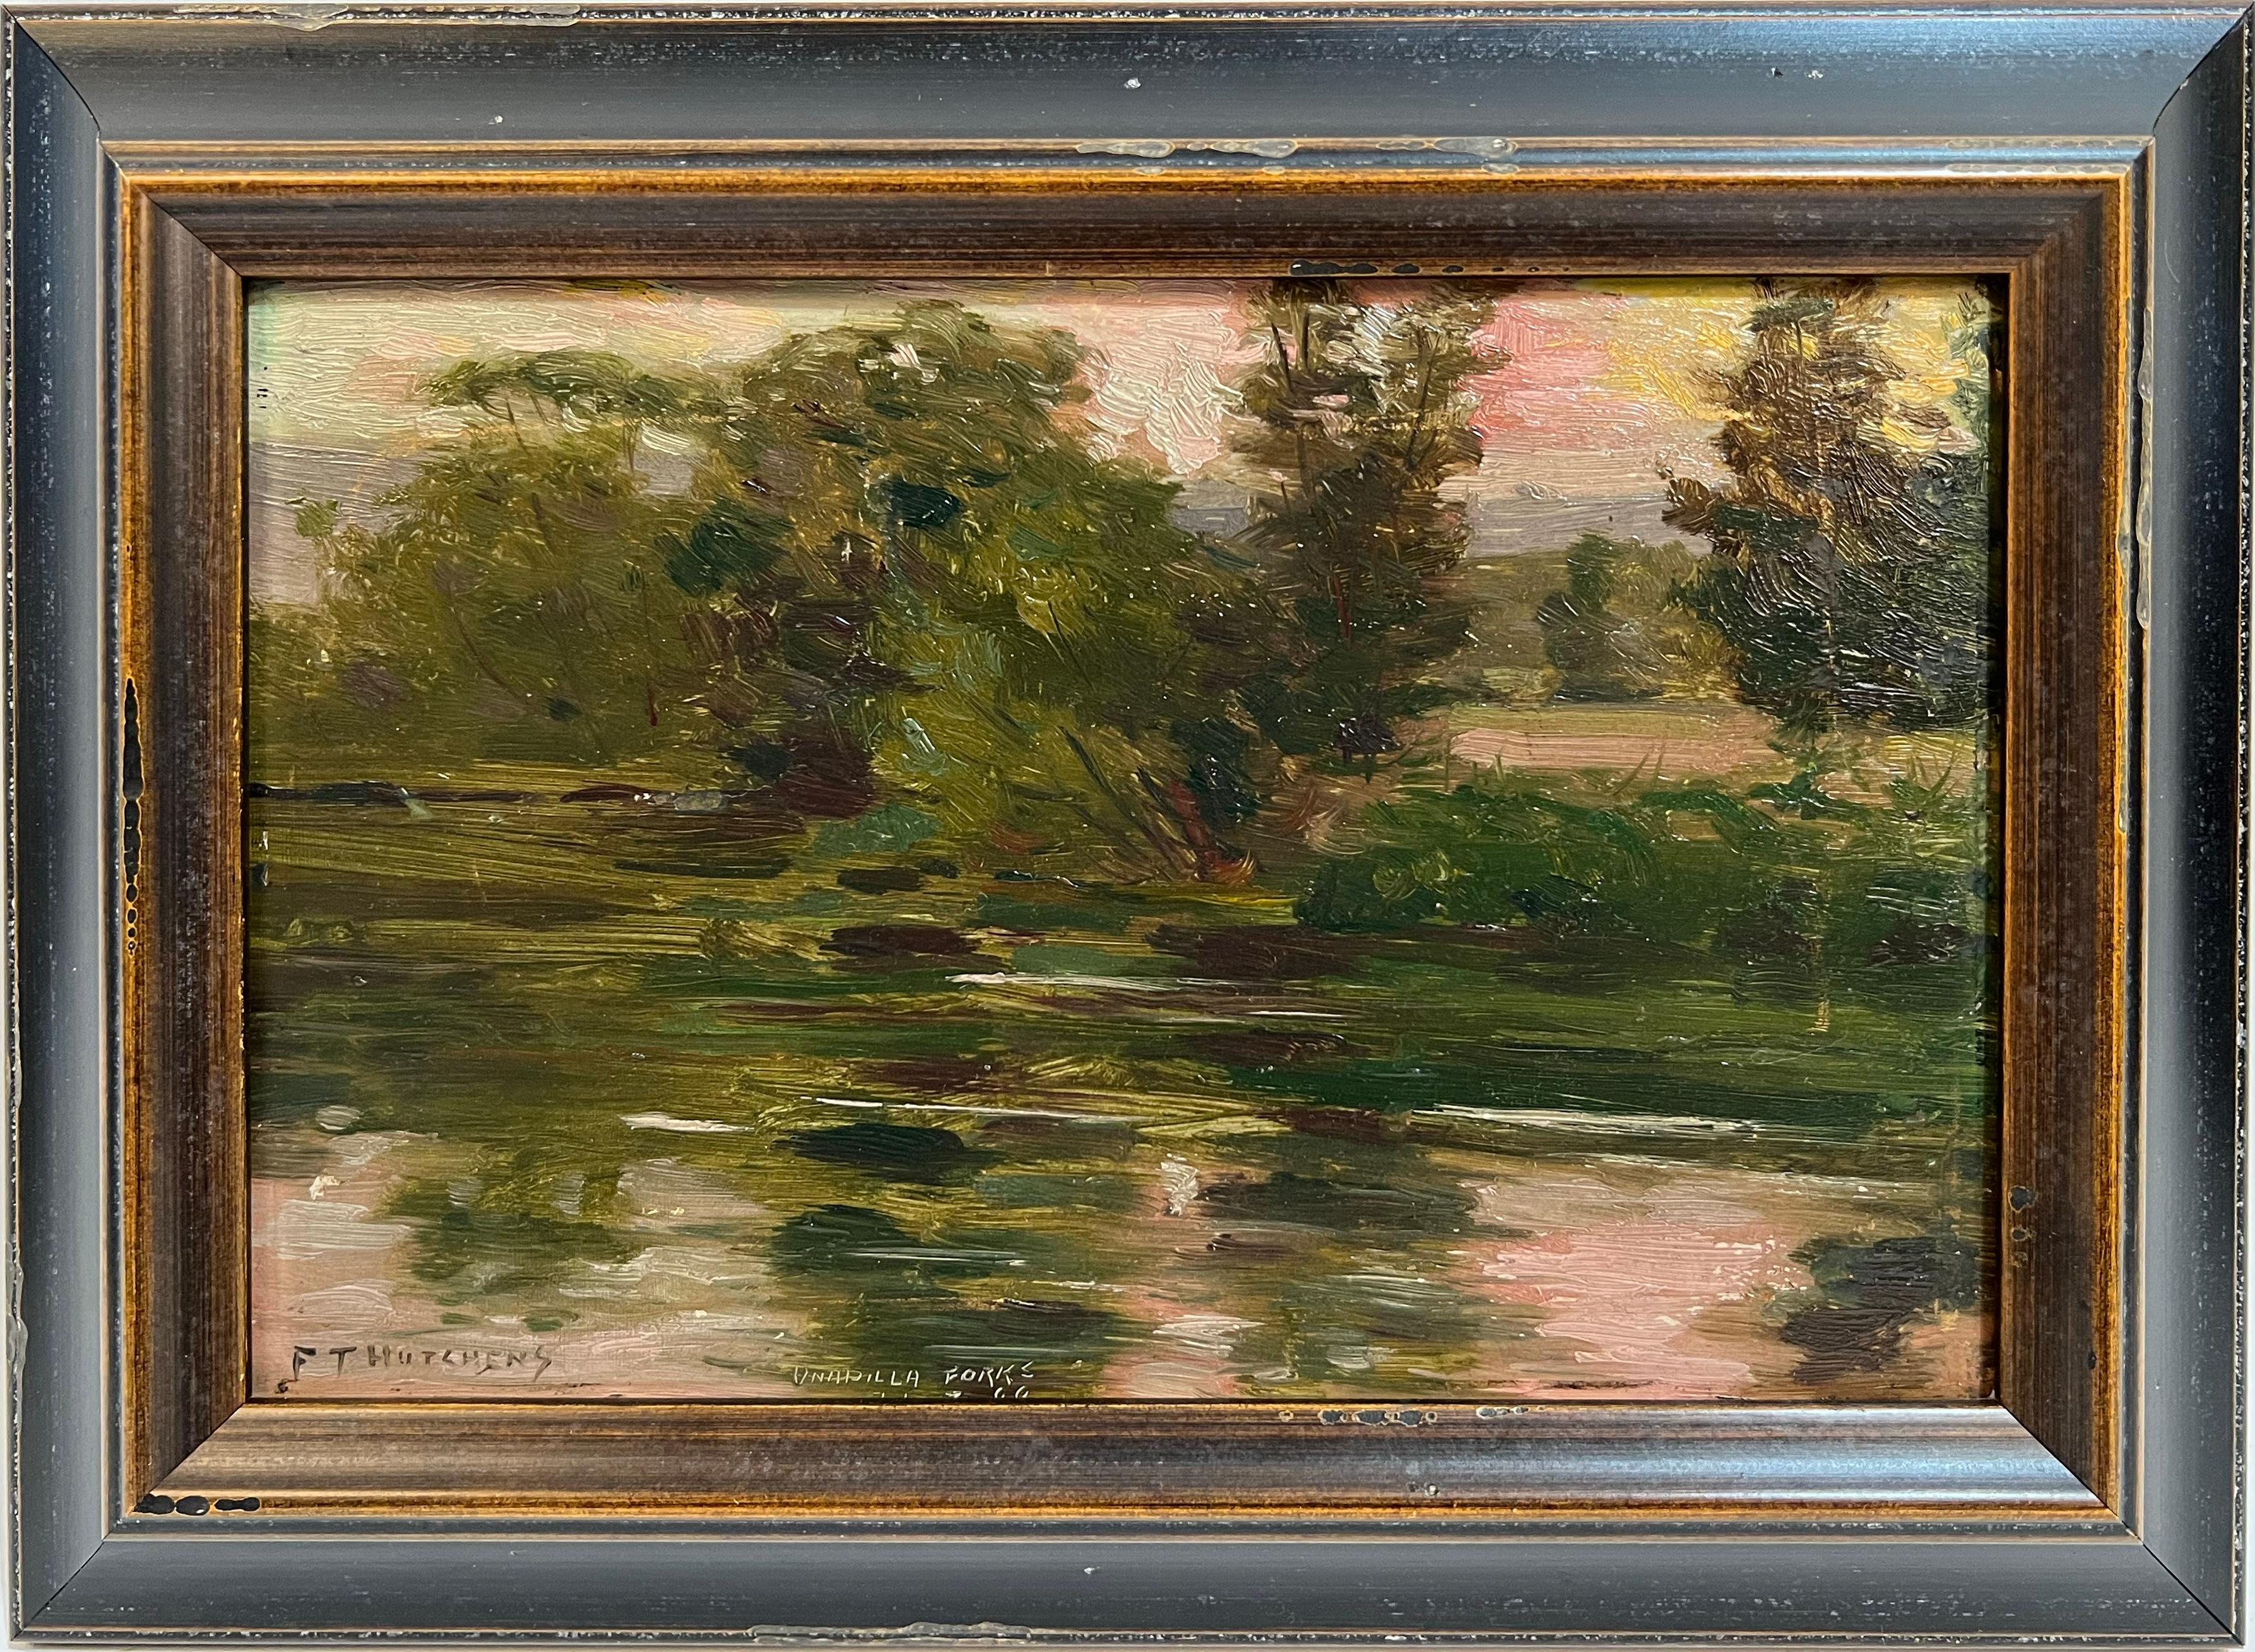 Frank Townsend Hutchens Landscape Painting - Antique American Impressionist Sunset Landscape Signed Original Oil Painting